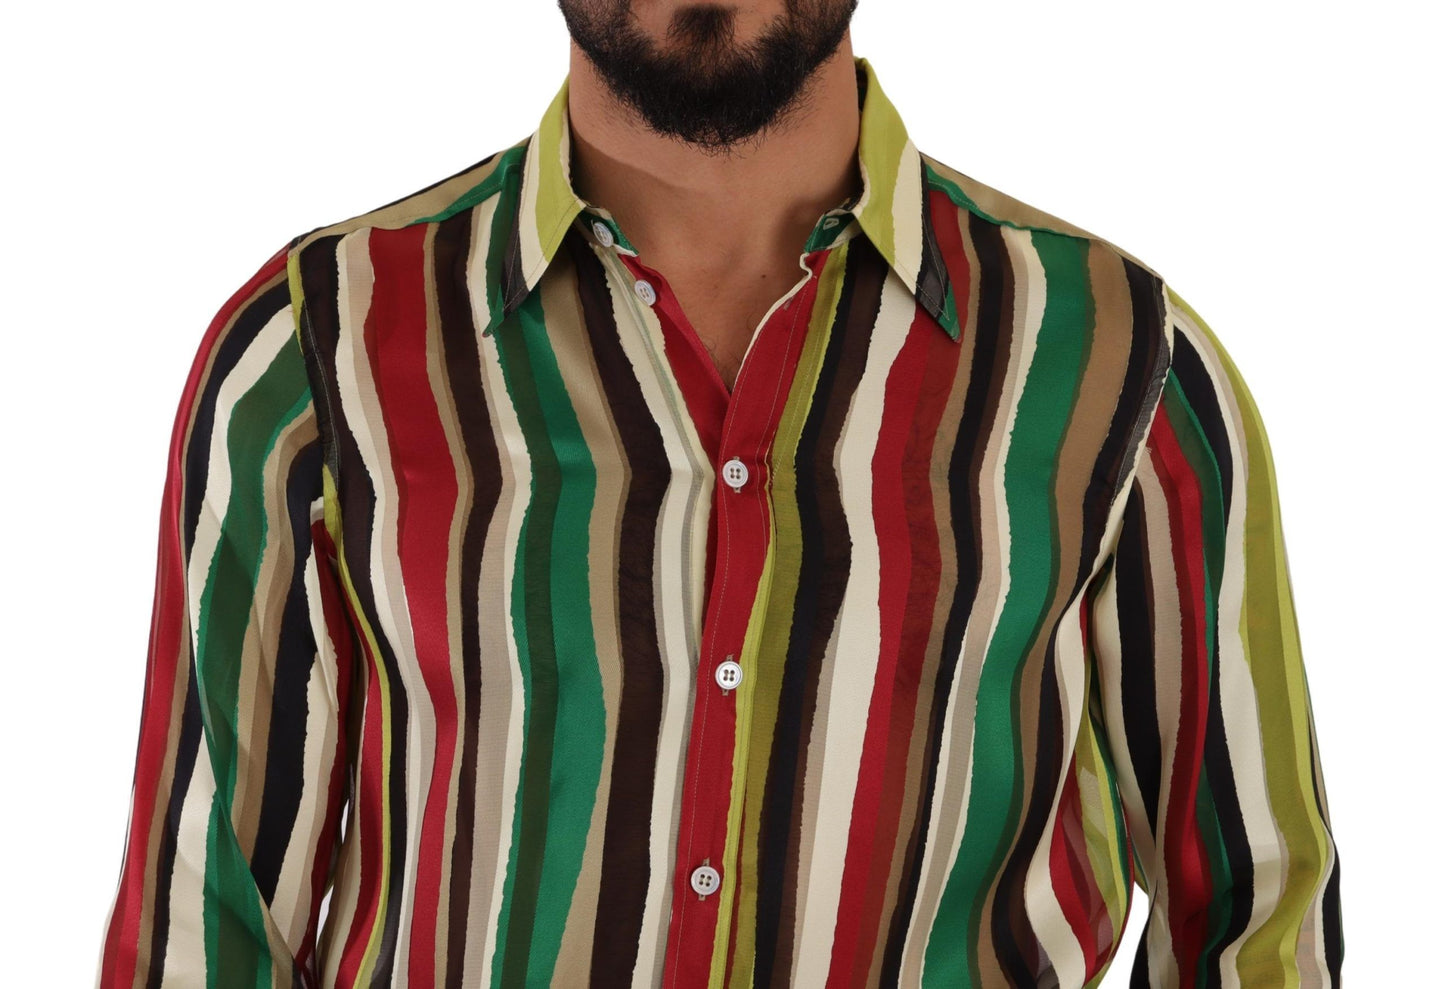 Elegant Multicolor Striped Silk Blend Shirt